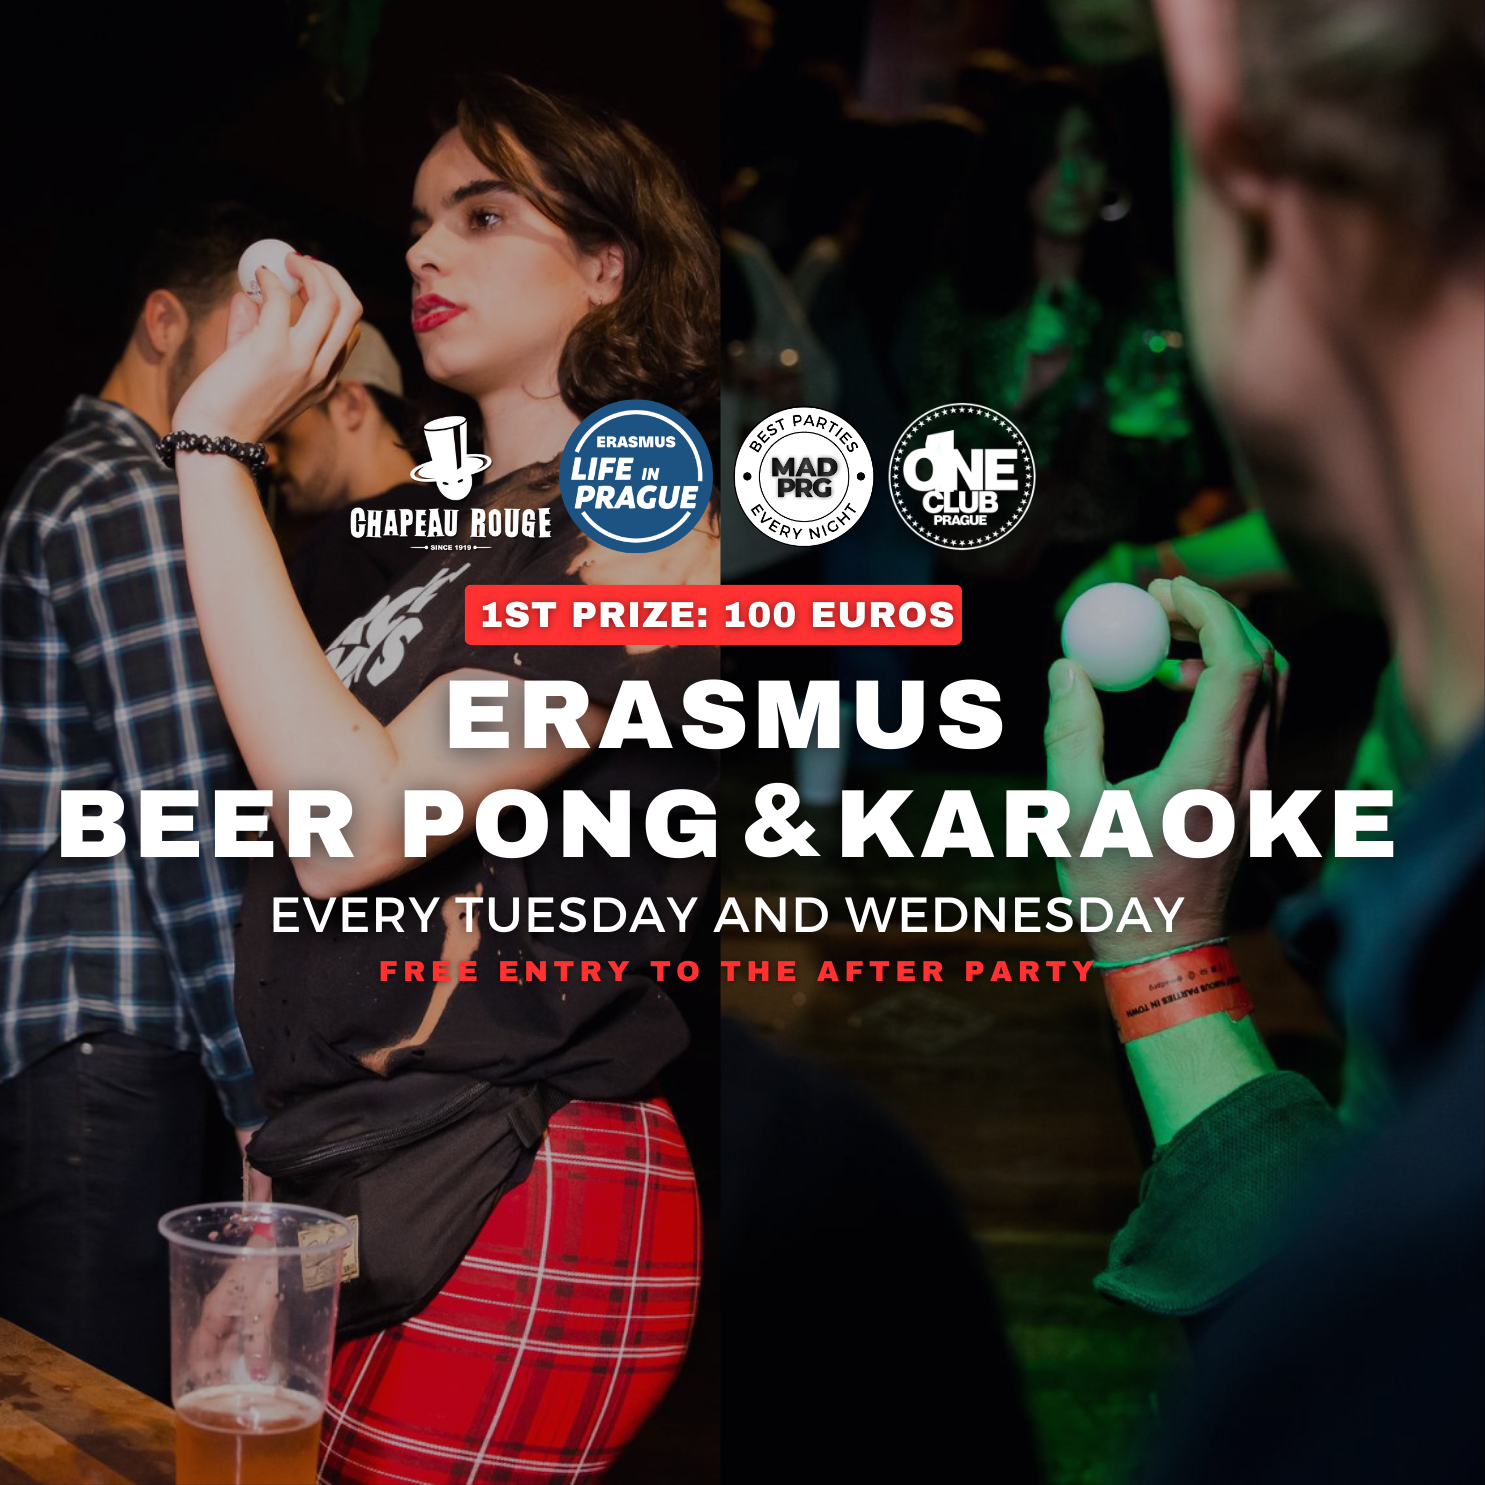 Erasmus Beer Pong & Karaoke Prague